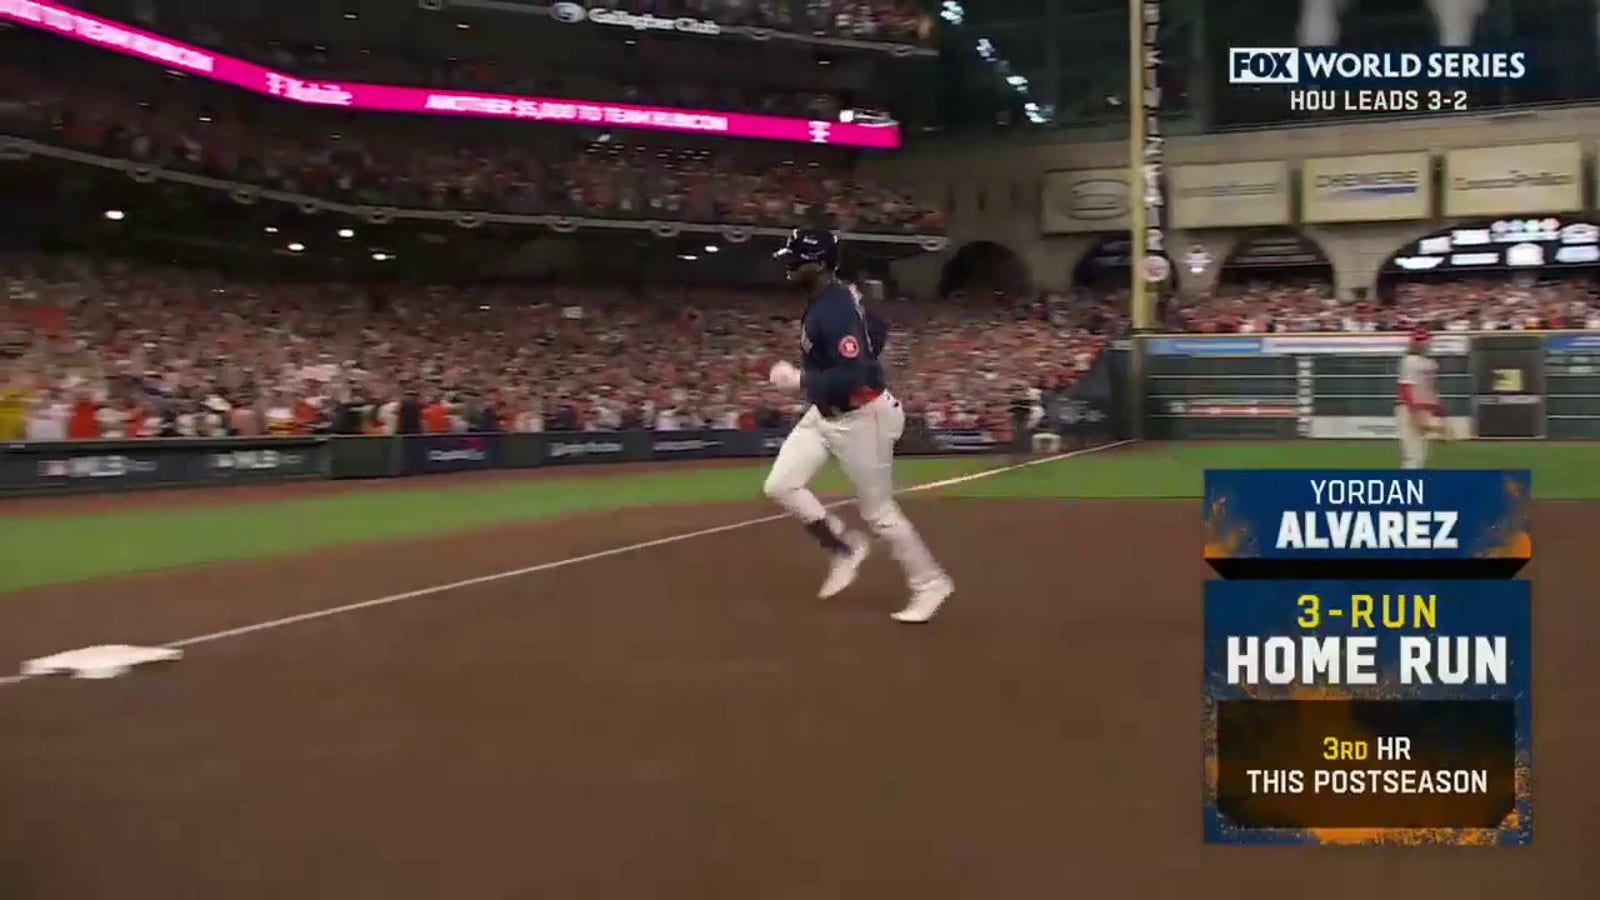 Yordan Alvarez smashes a three-run home run to put the Astros ahead 3-1